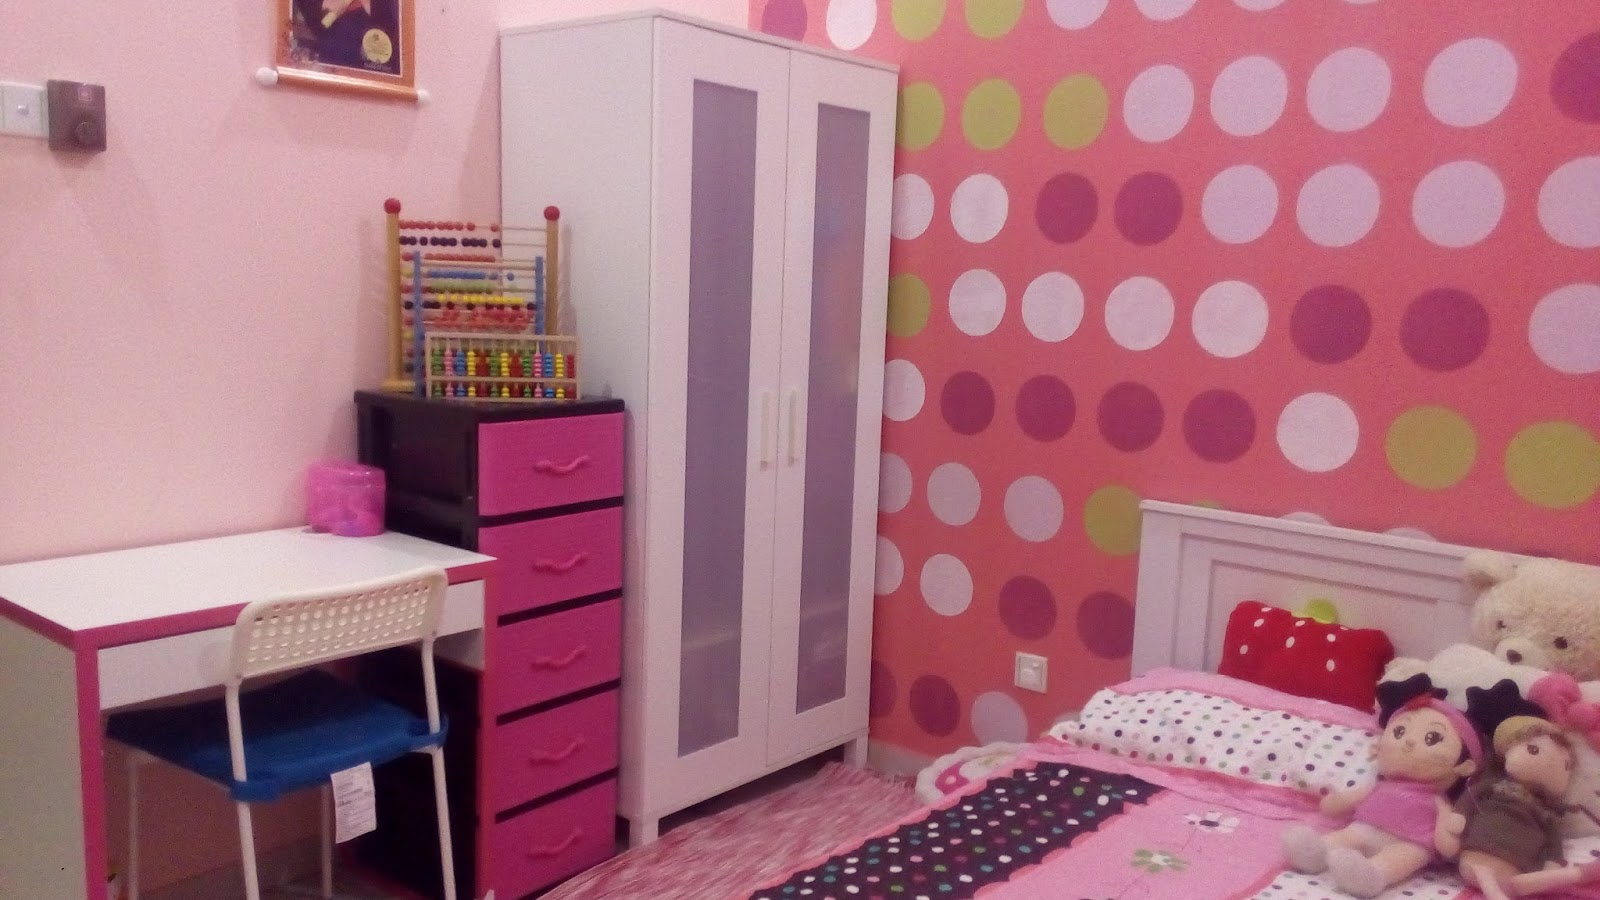 wallpaper perempuan,bedroom,pink,room,furniture,bed